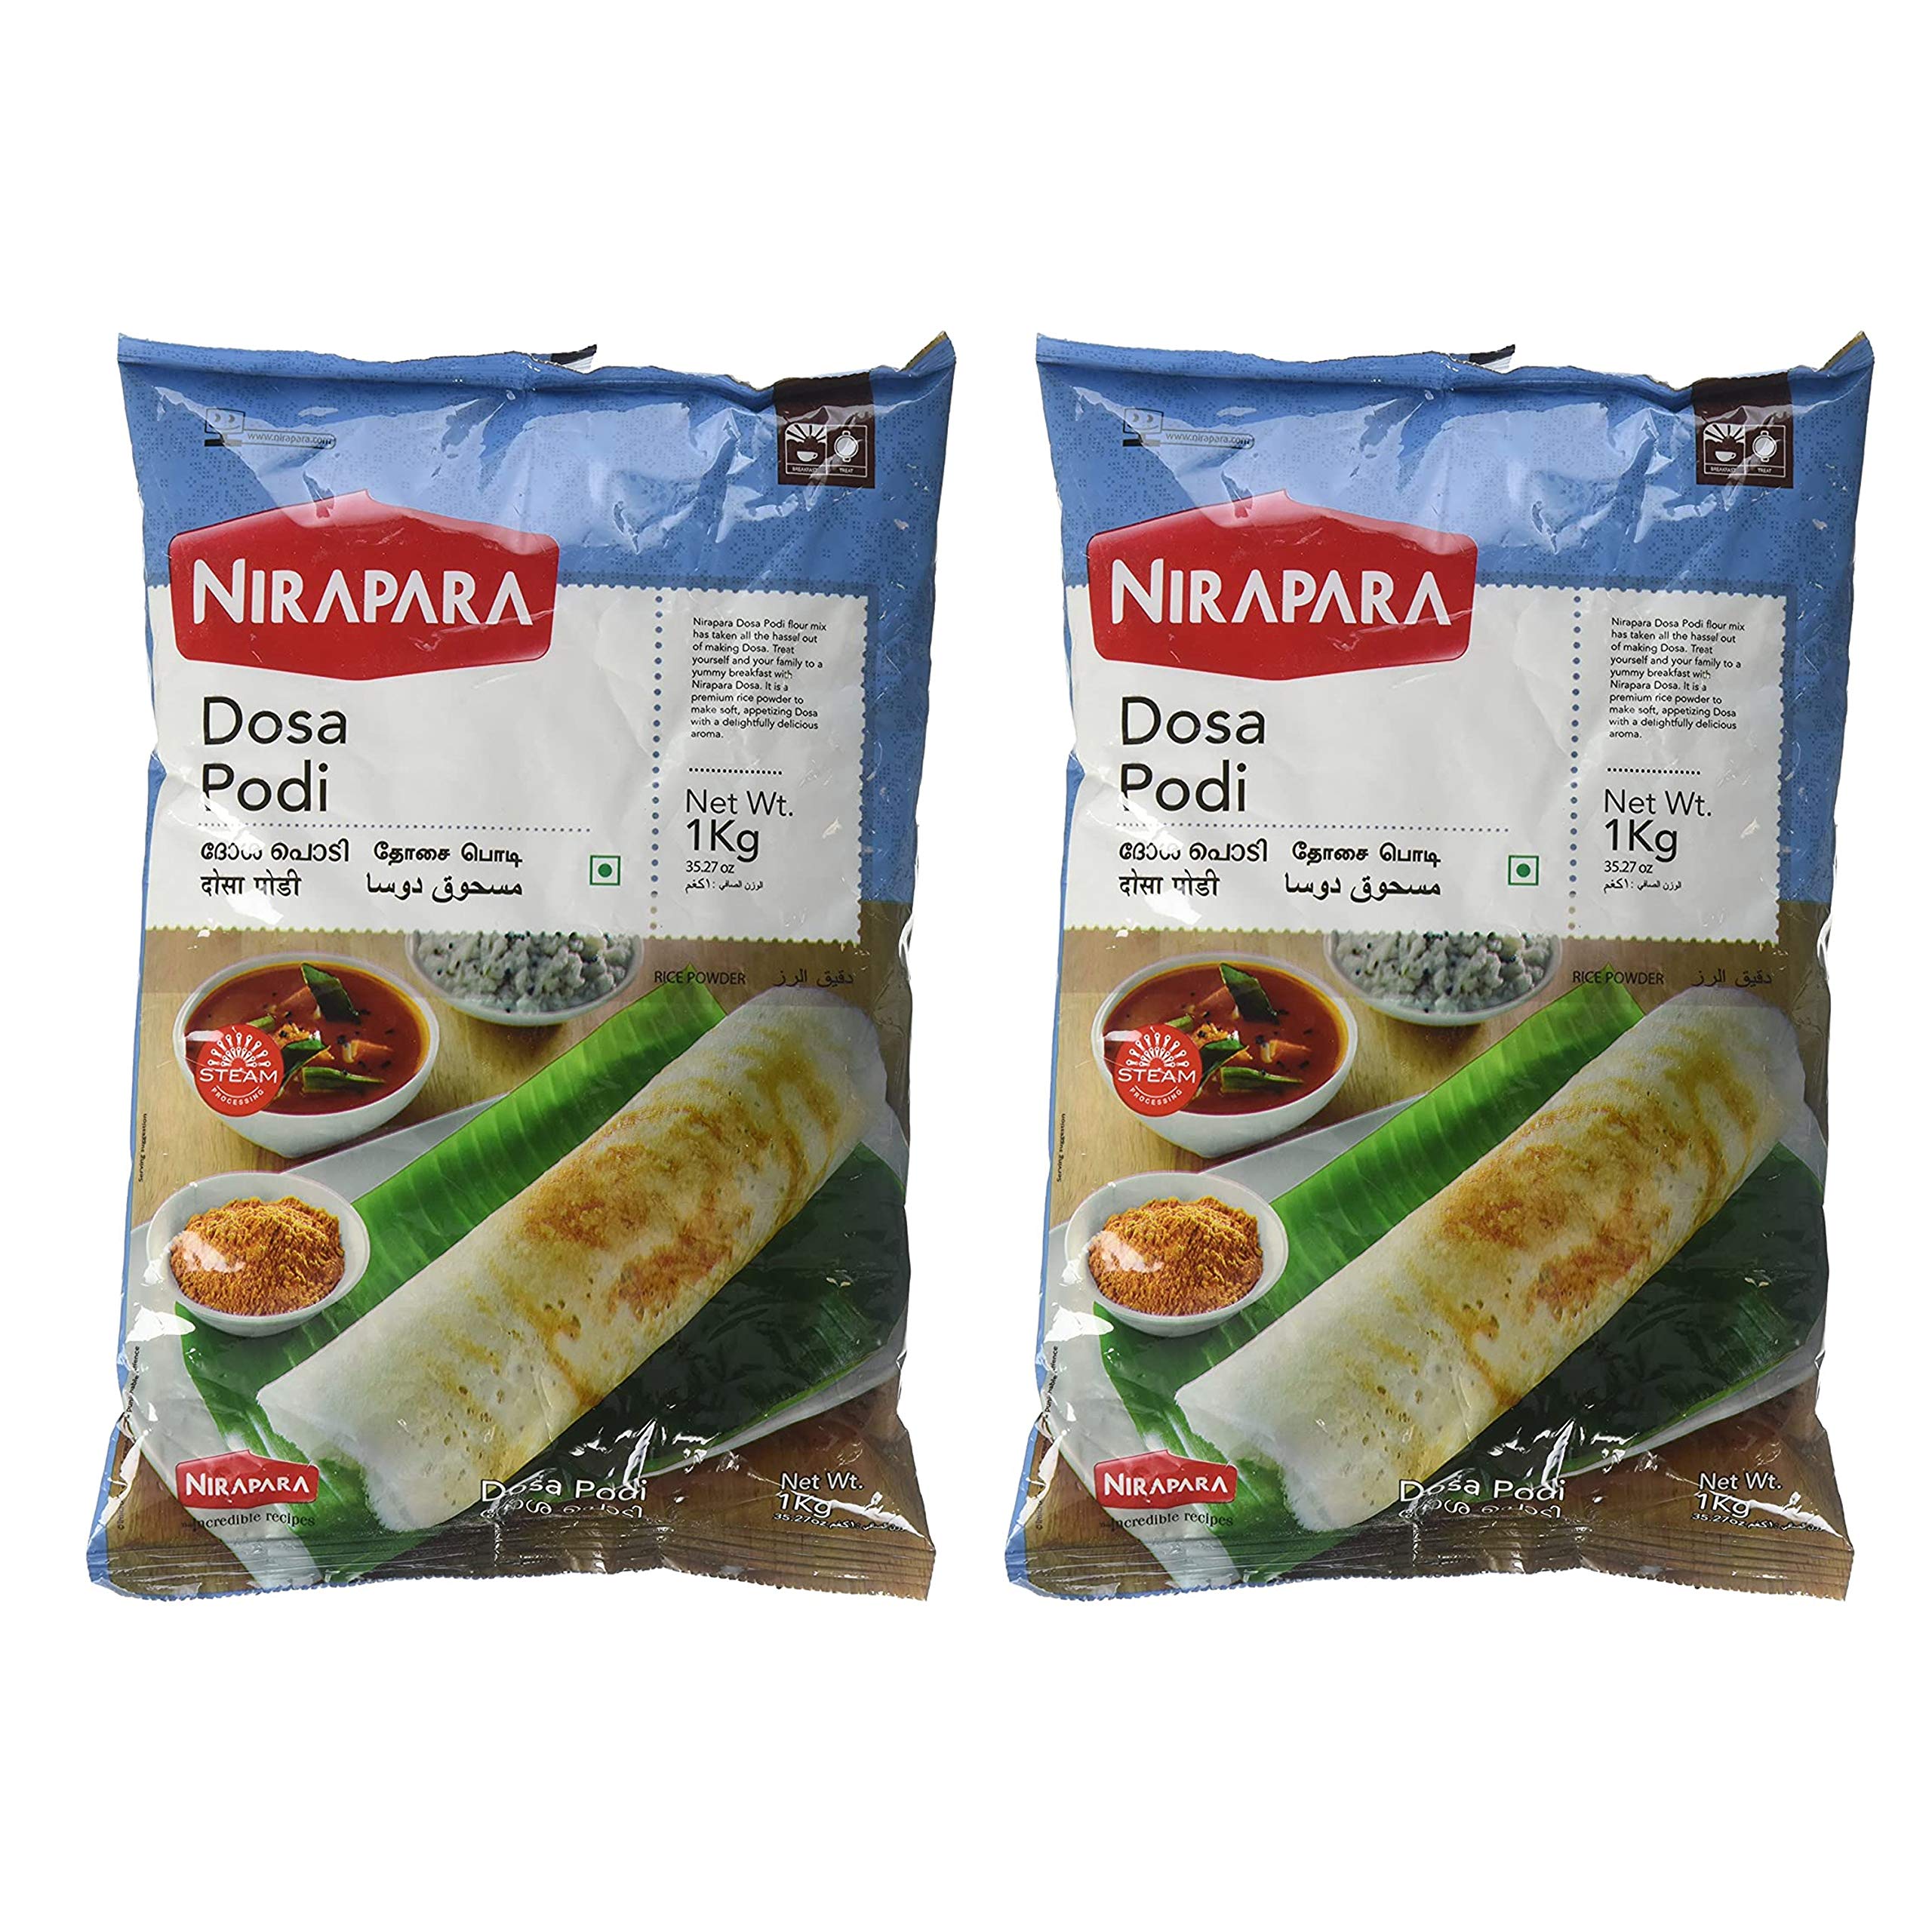 Nirapara Dosa Podi Indian Flour (2 Pack, Total of 2kg)